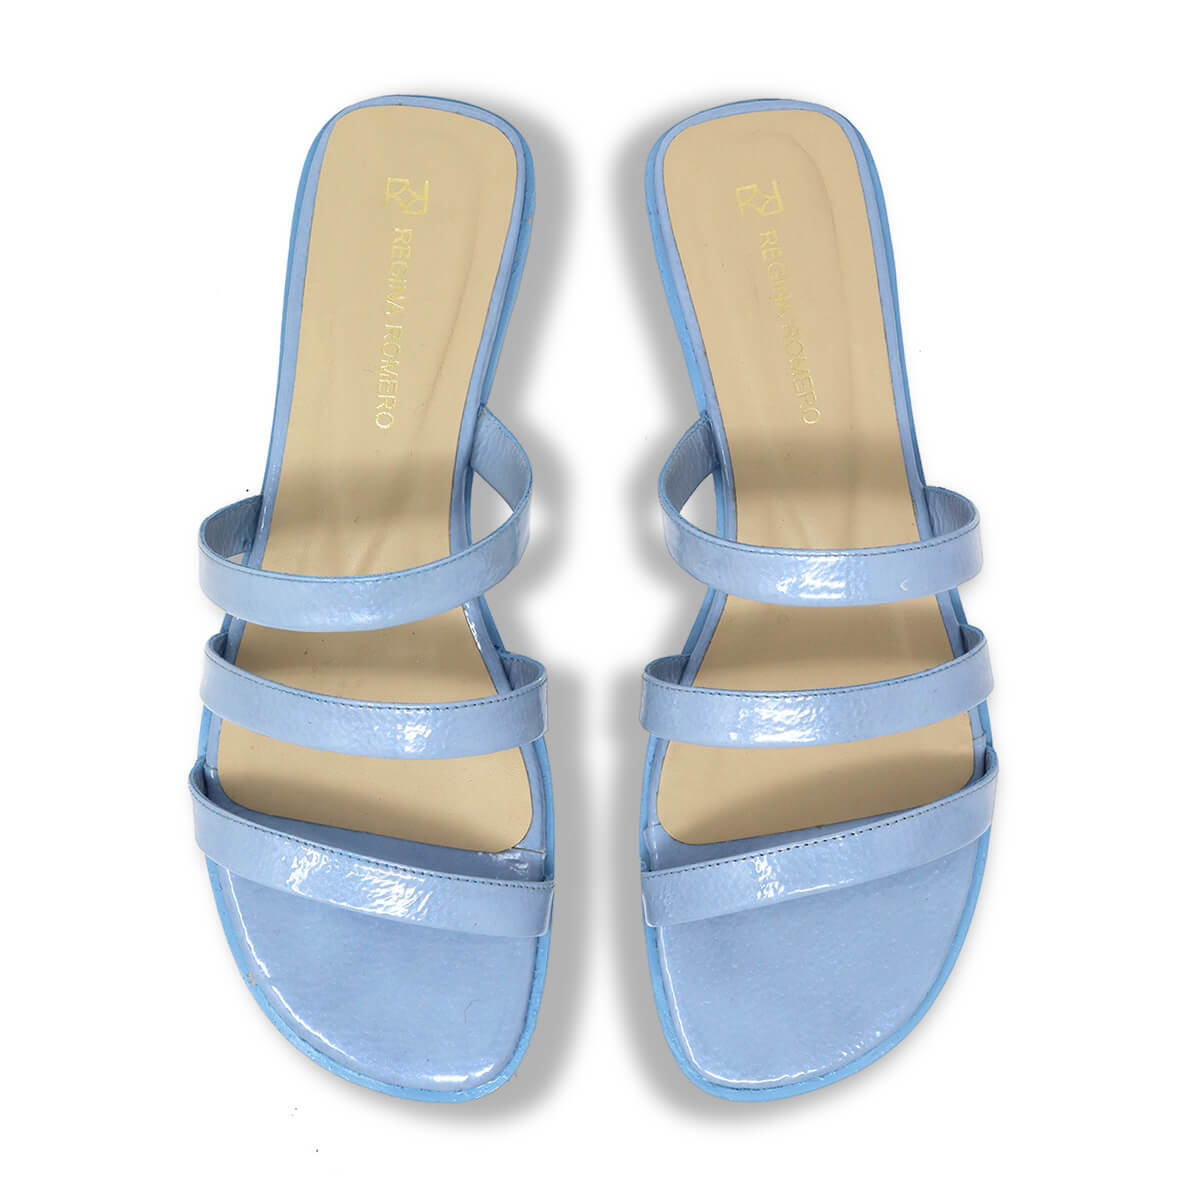 CILIA - Charol Azul Claro Regina Romero Zapato Sandalia de Piso Para Dama en Piel